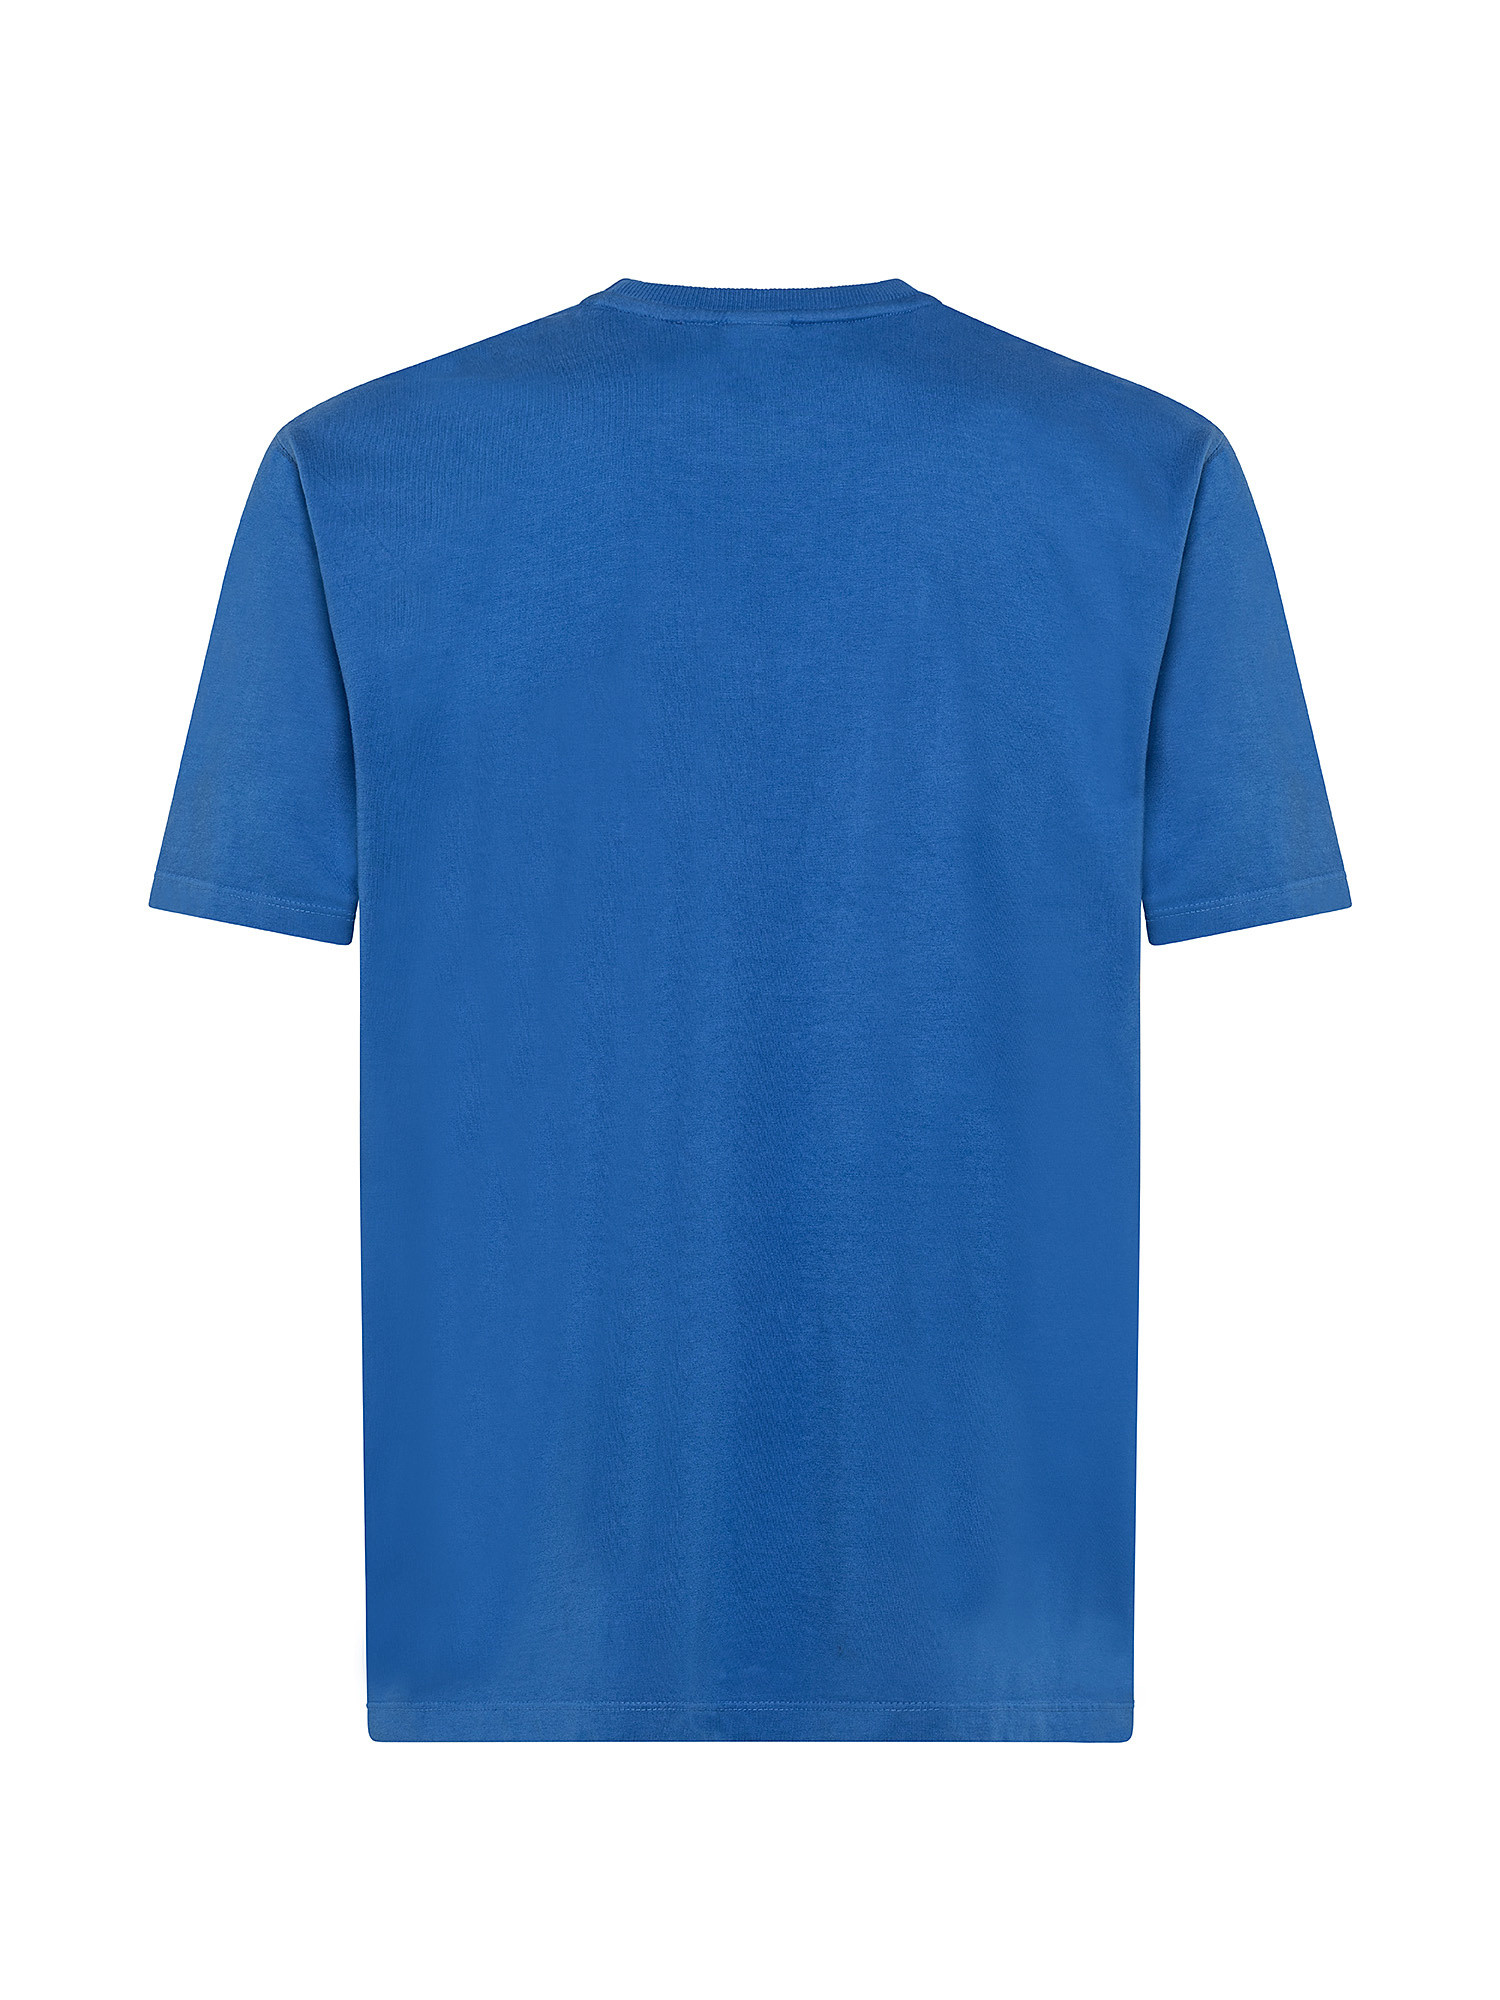 Hank Baseball T-Shirt, Blue, large image number 1